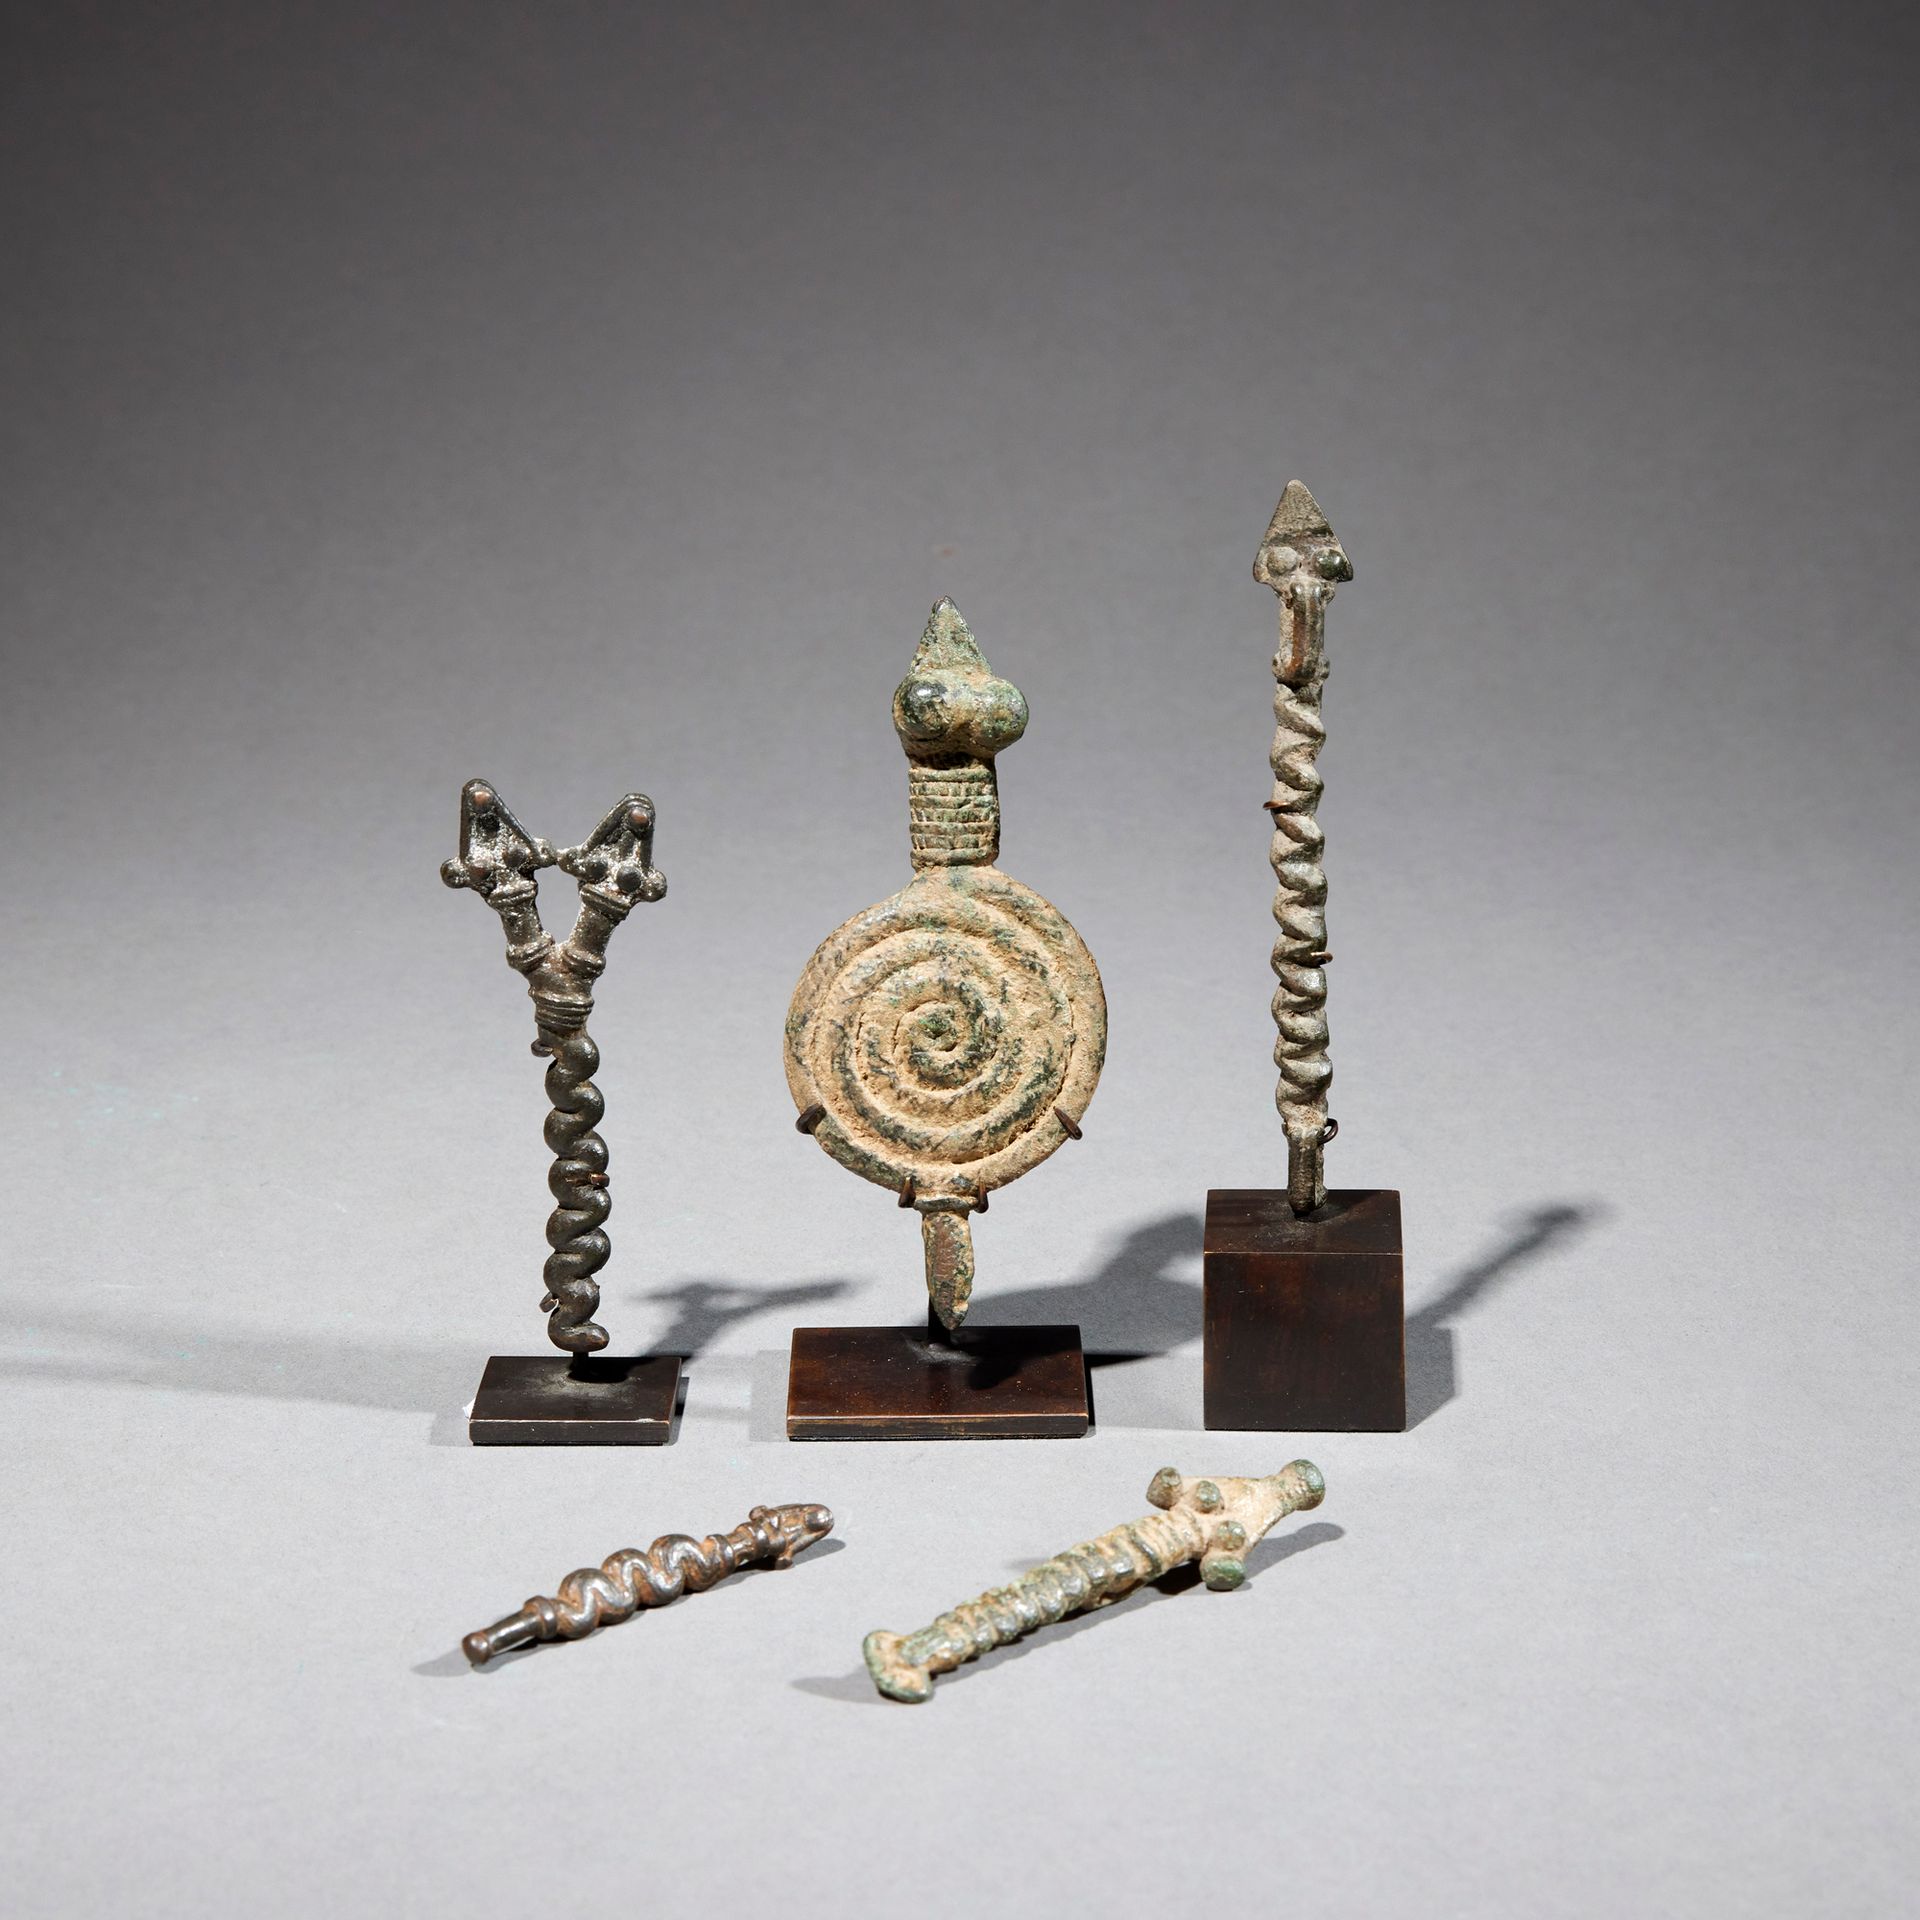 Null 五甘文物

布基纳法索

铜质

H.5.4至9.8厘米



一套四件描绘蛇的青铜甘器，其中一件是盘着的，一件有两个头。